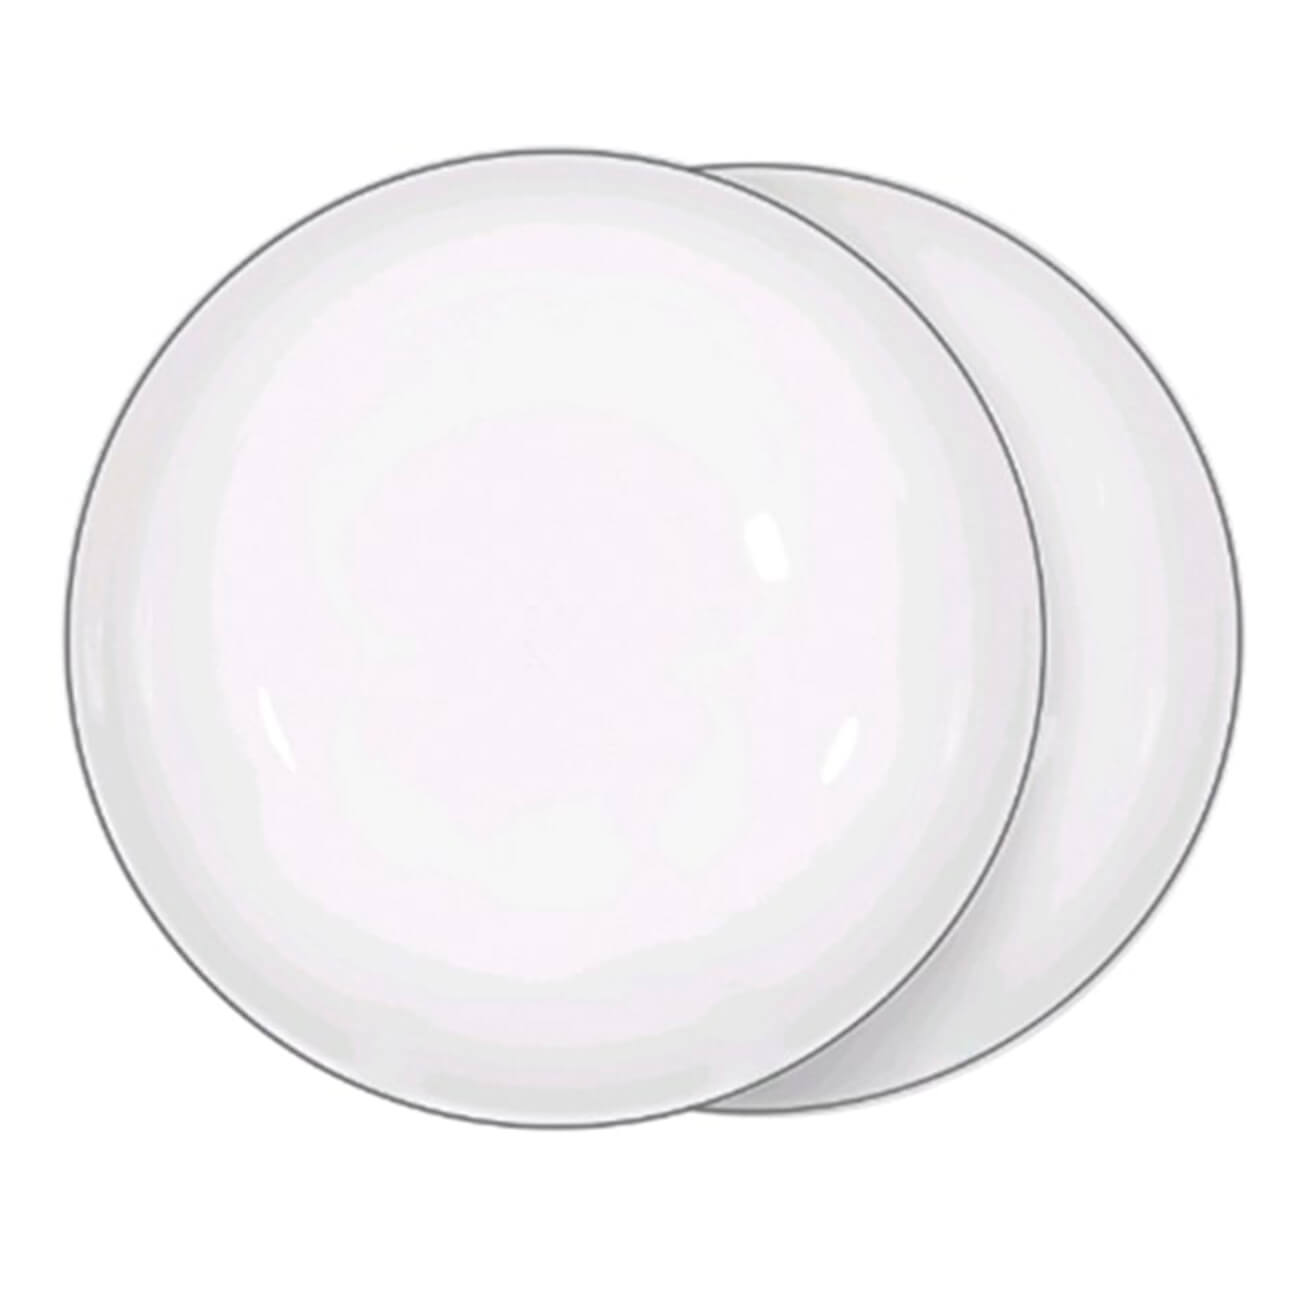 Тарелка суповая, 20х5 см, 2 шт, фарфор F, белая, Ideal silver